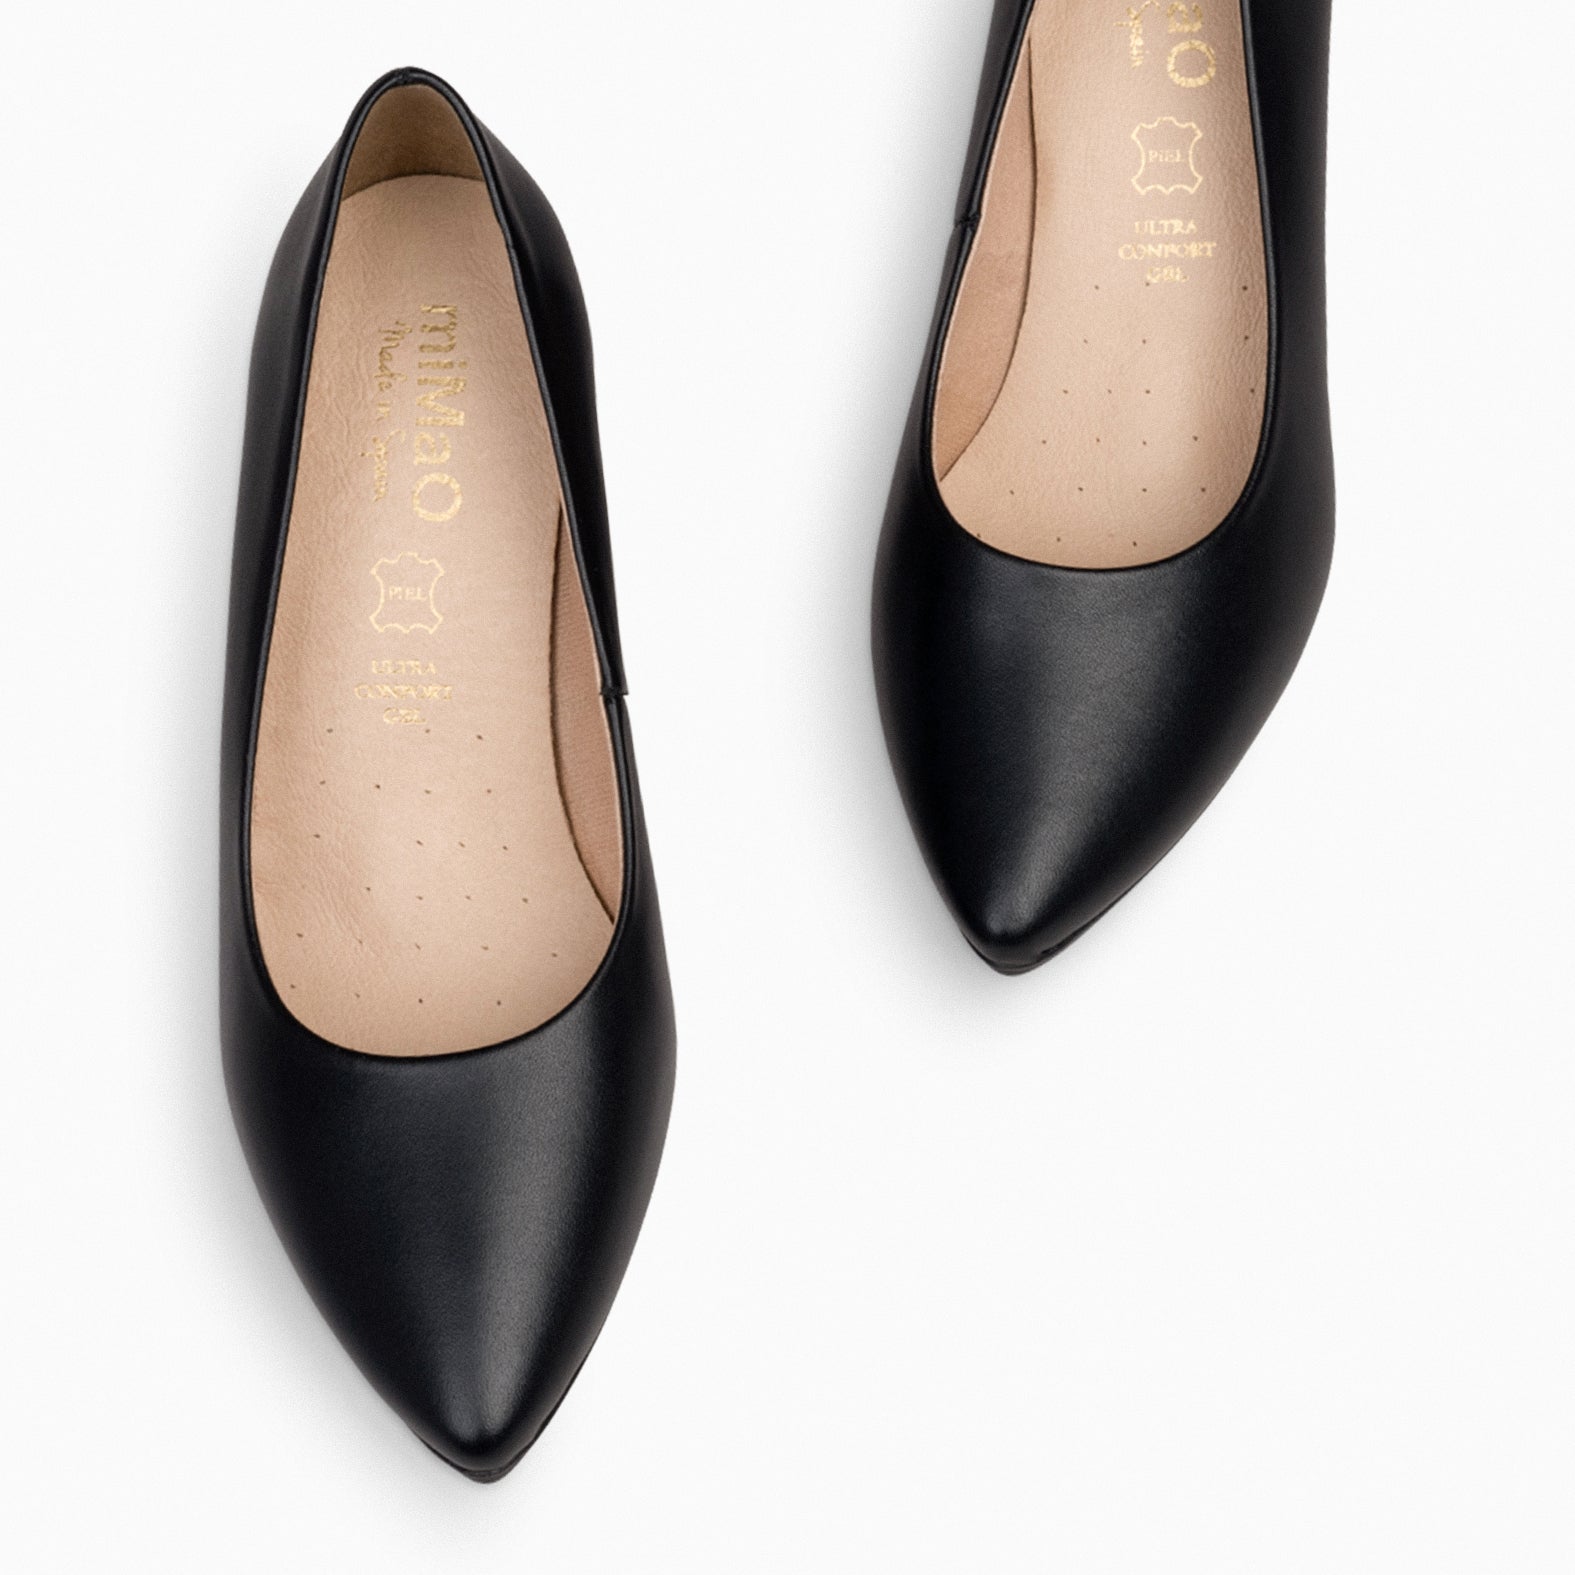 URBAN S SALON – BLACK nappa leather mid heel